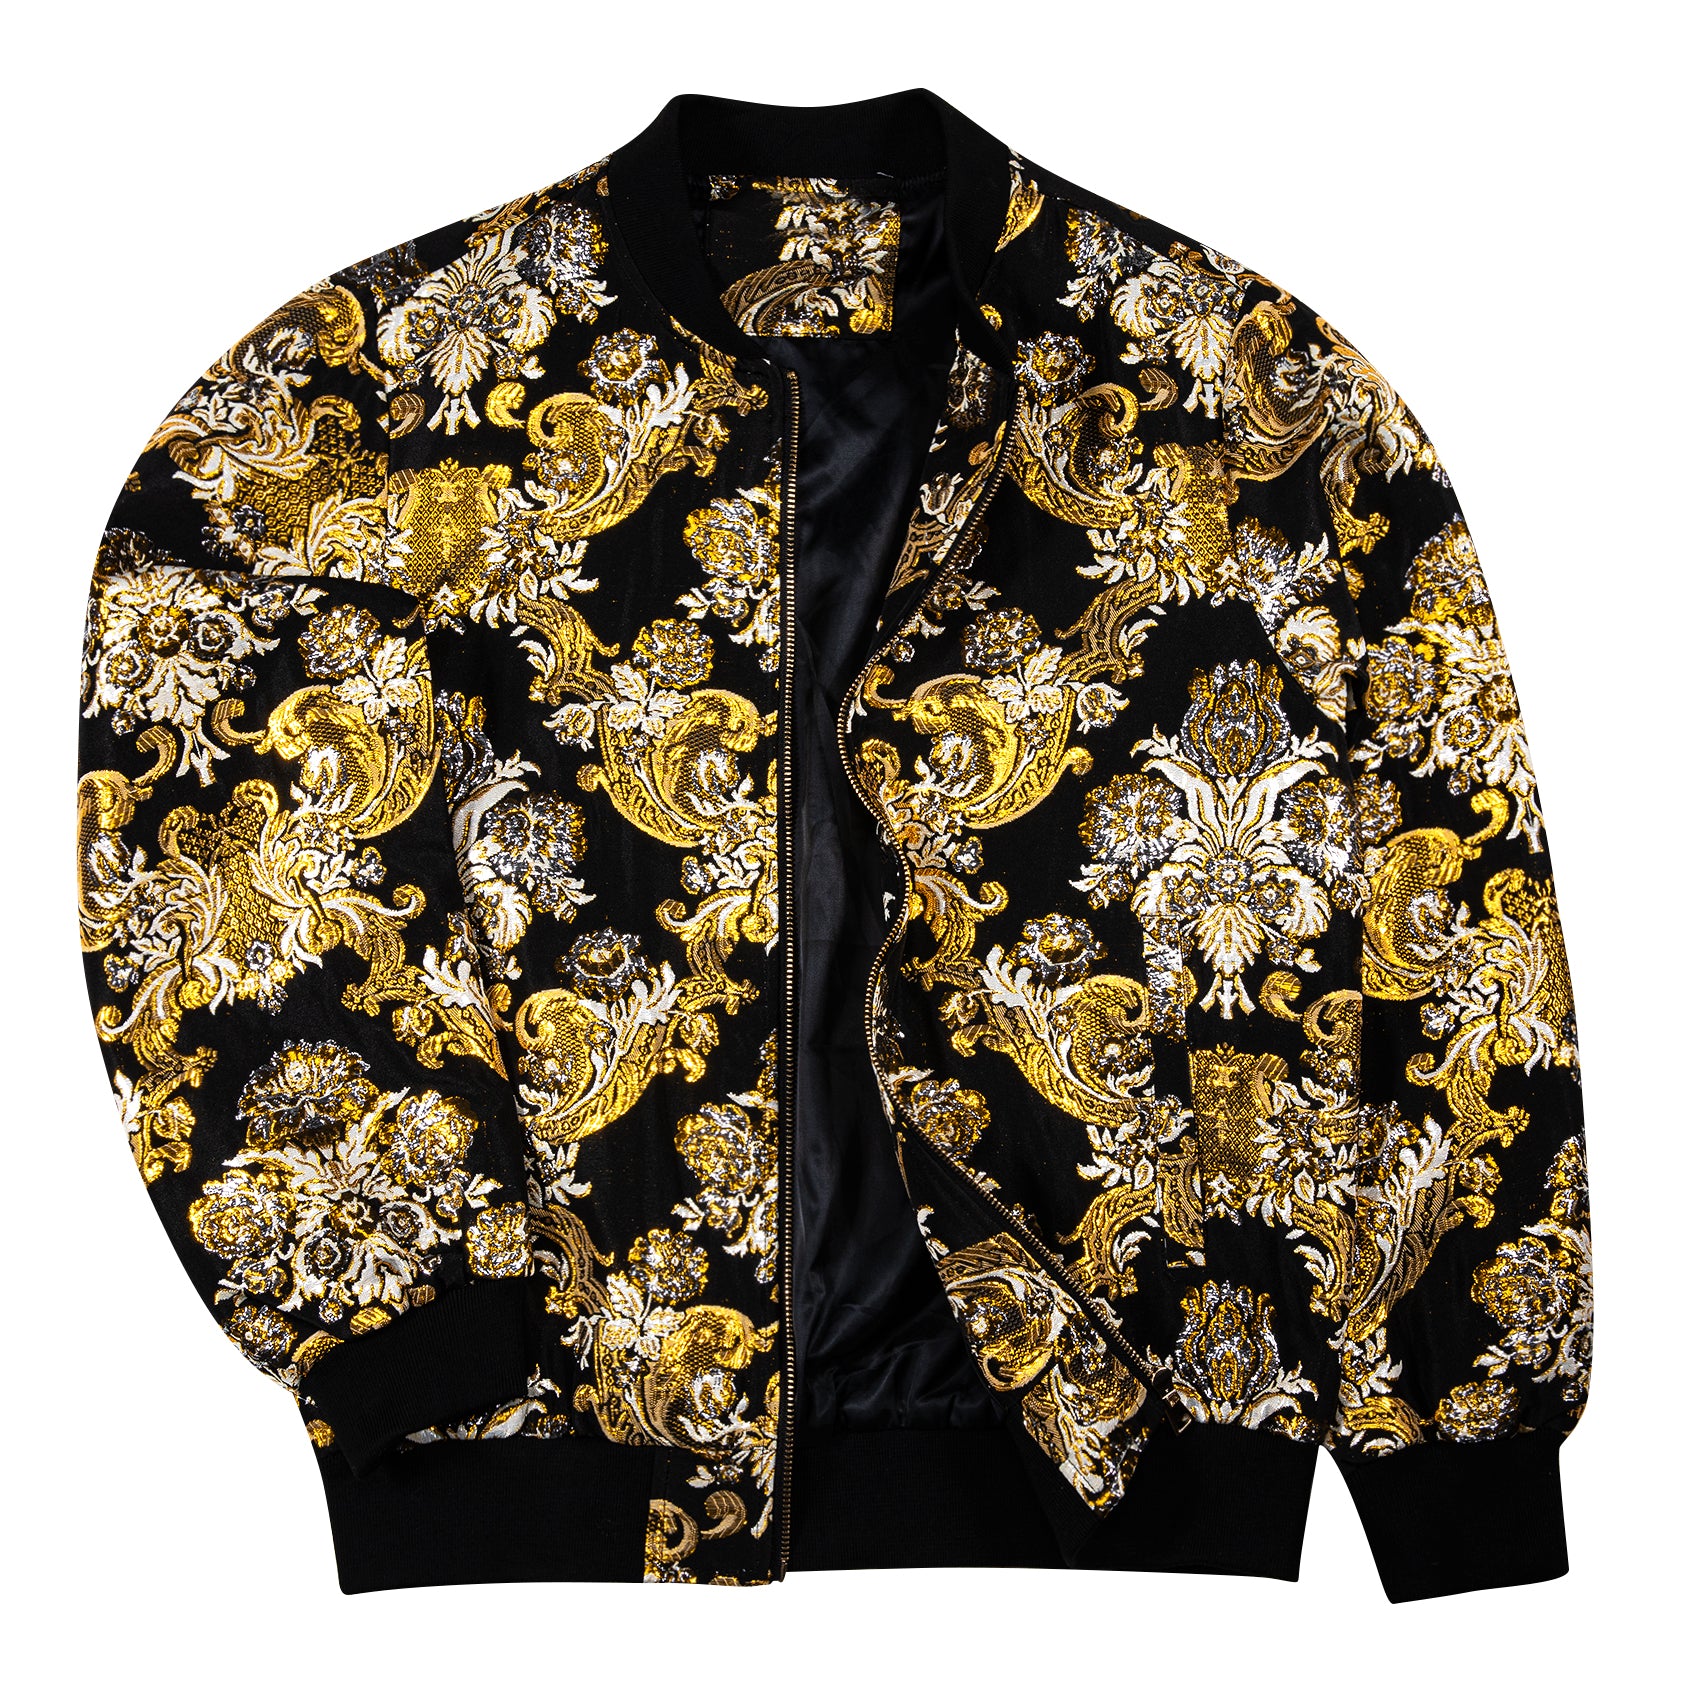 Barry.wang Zipper Jacket Men's Gold Black Floral Jacquard Paisley Jacket